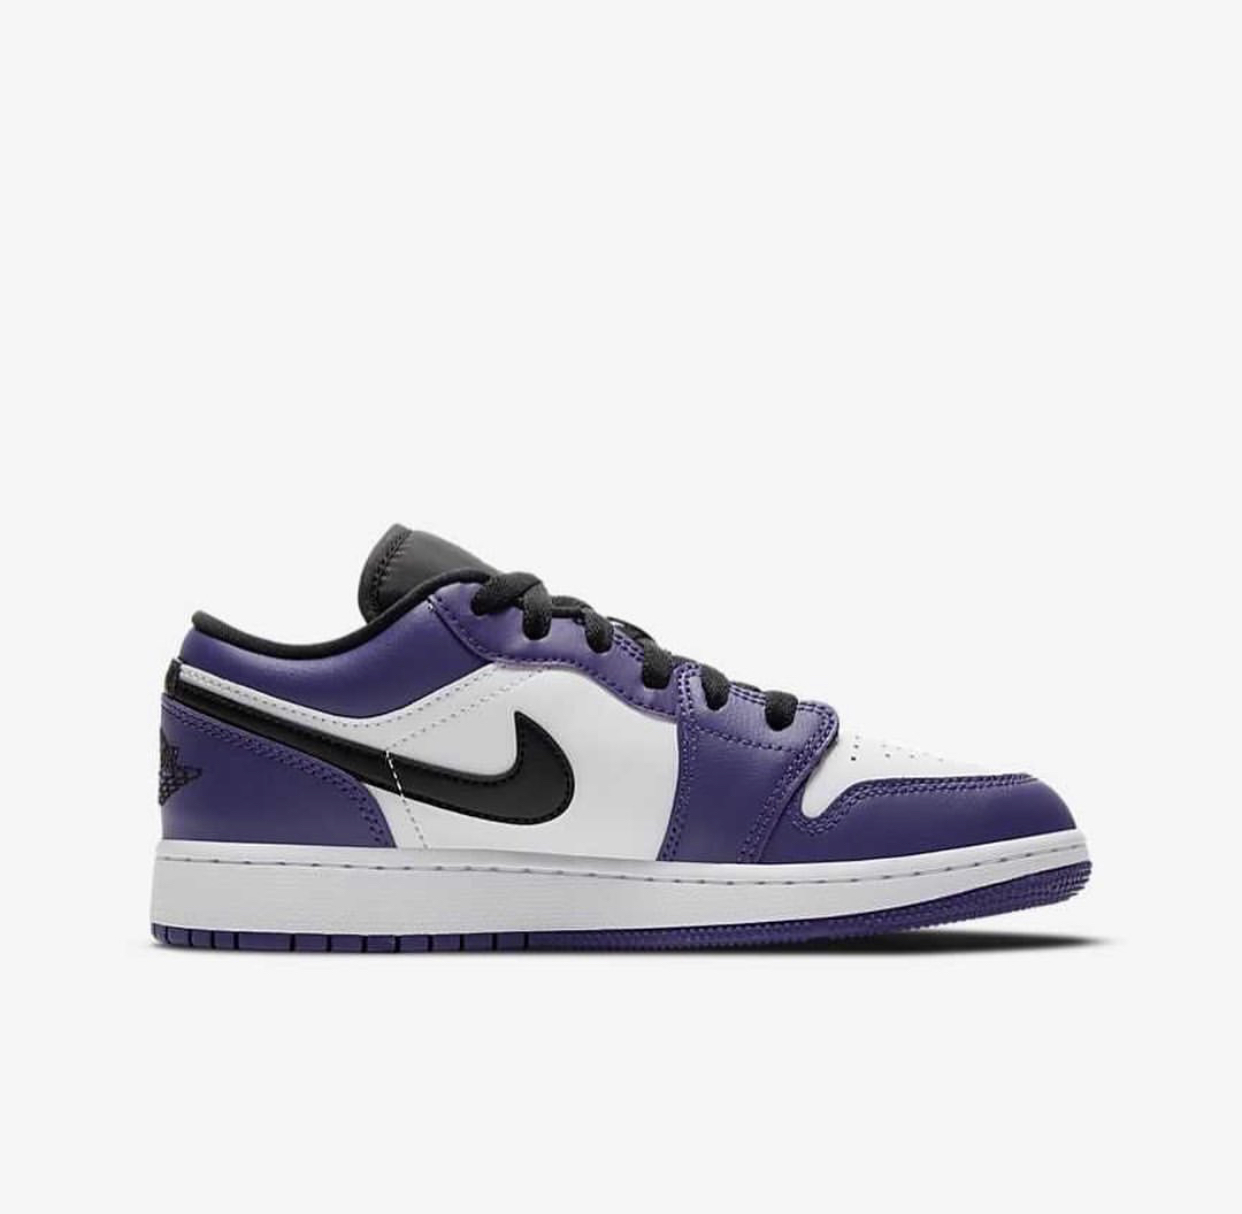 Nike Air Jordan 1 Low “Court Purple” – Klean Kicks Lab